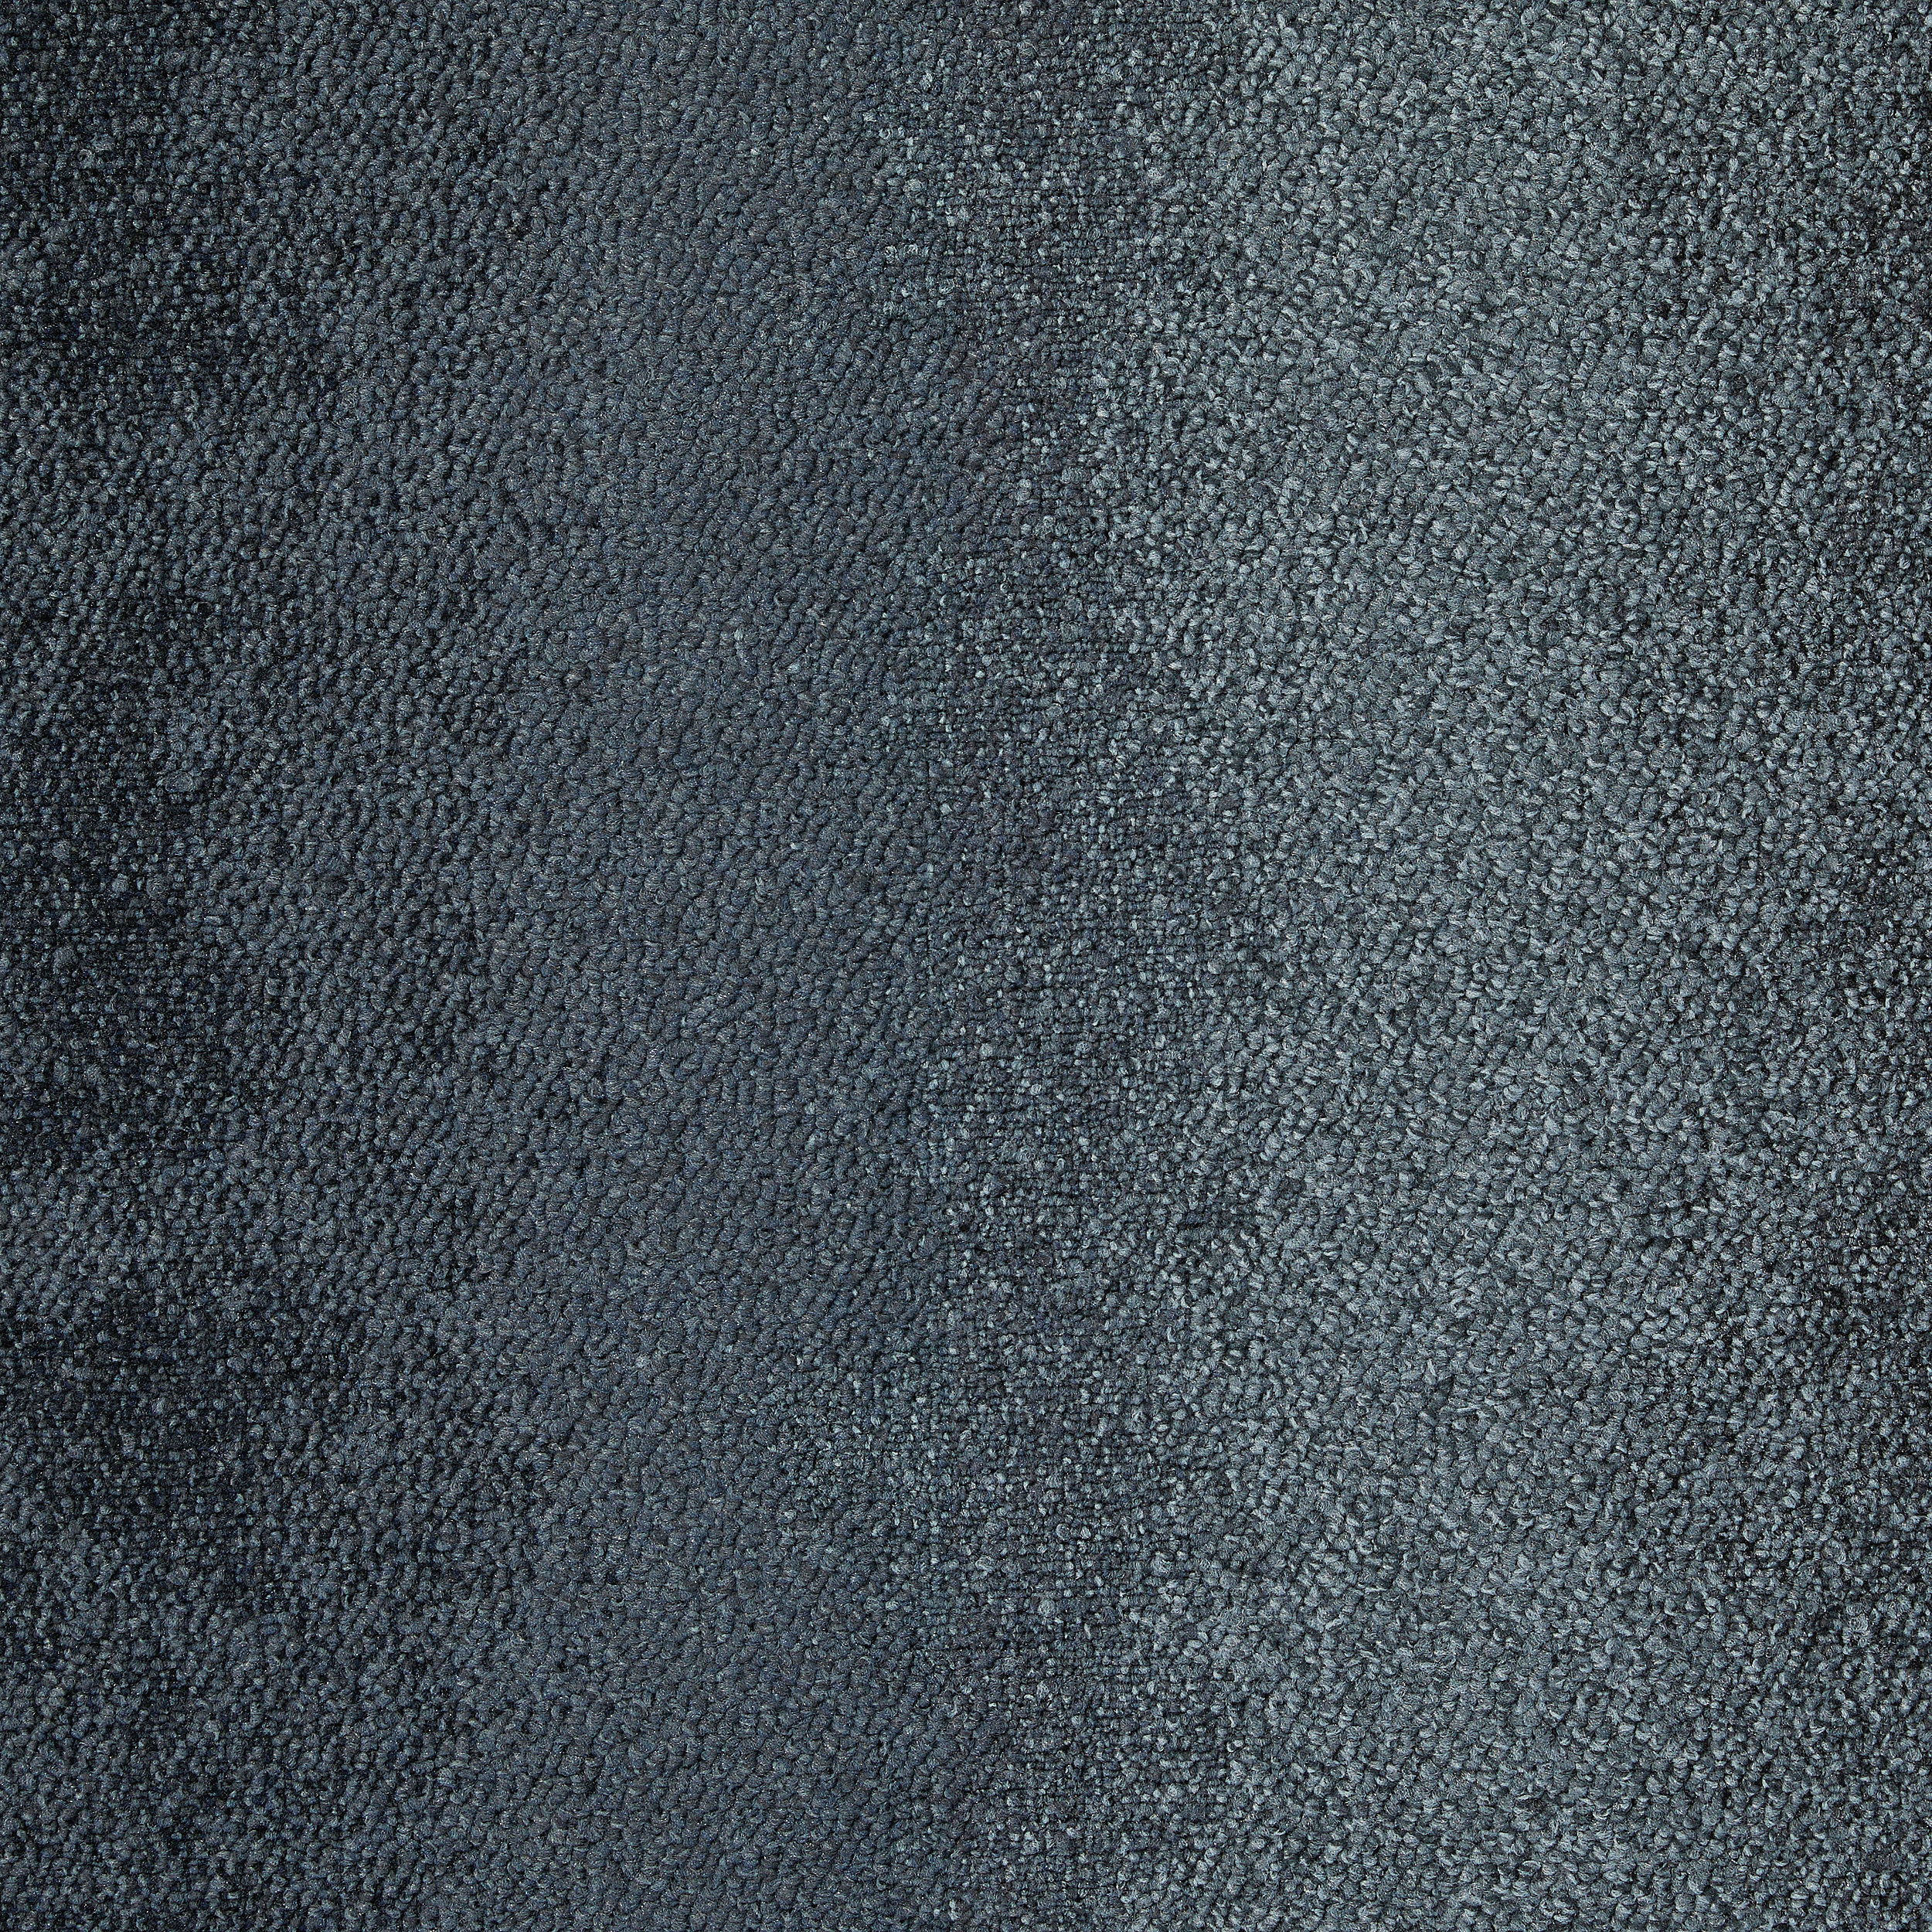 CE200 Carpet Tile in Perceive/Identify Bildnummer 8